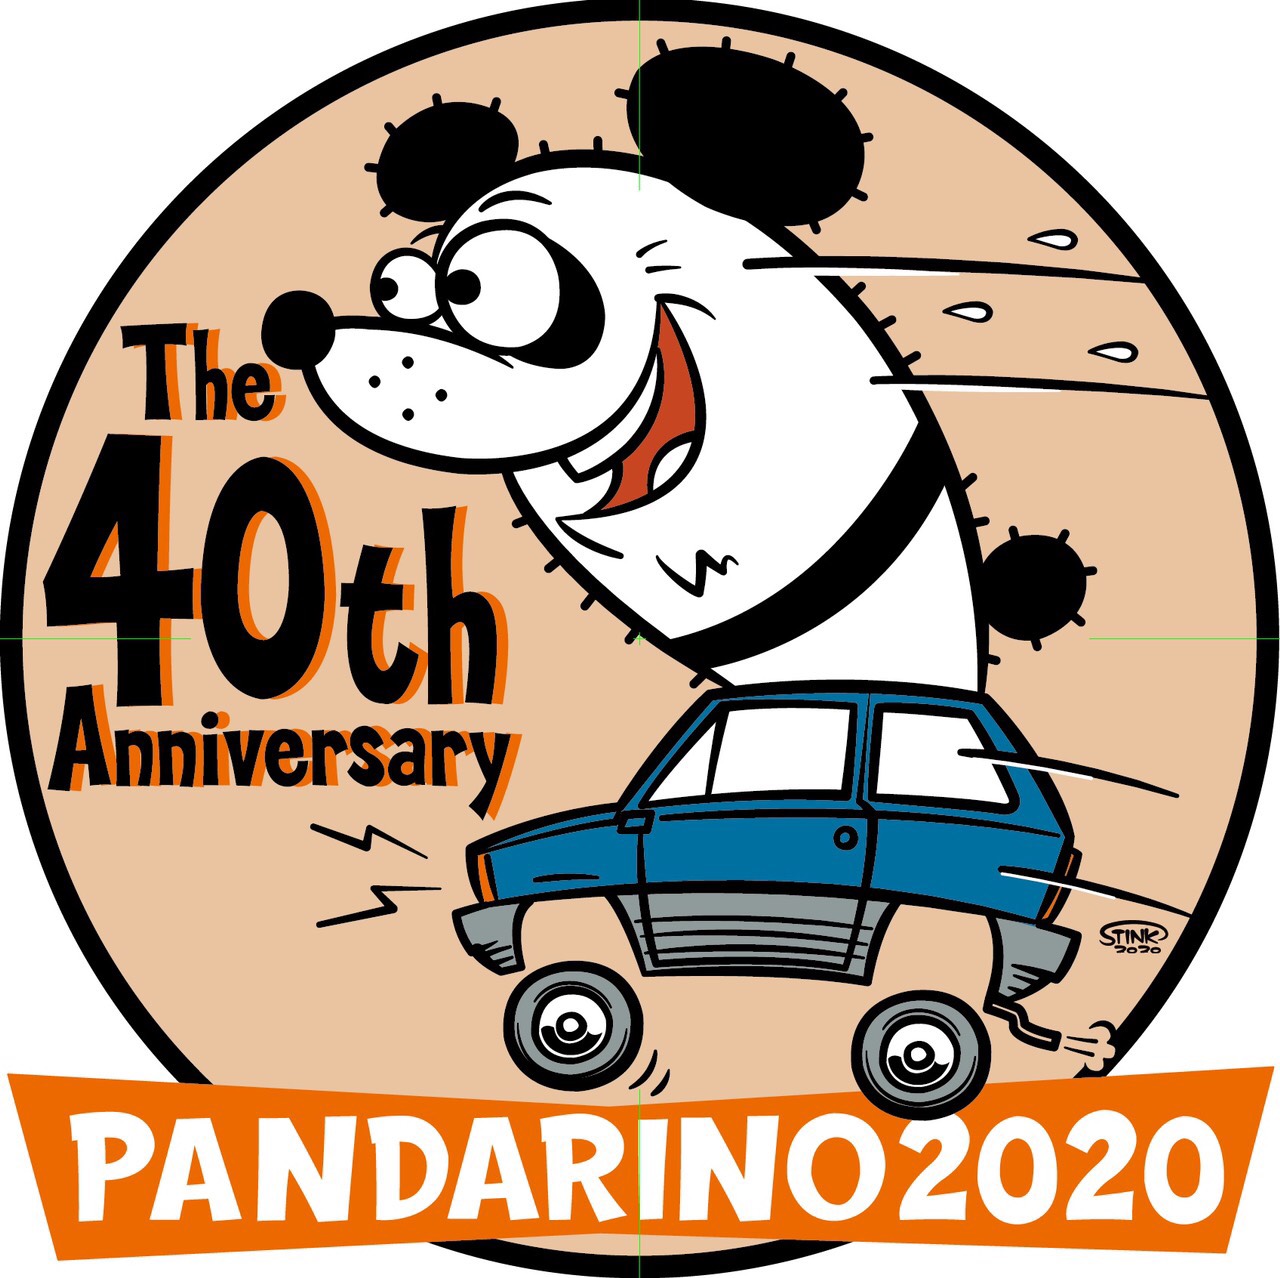 pandarino2020 イラスト2